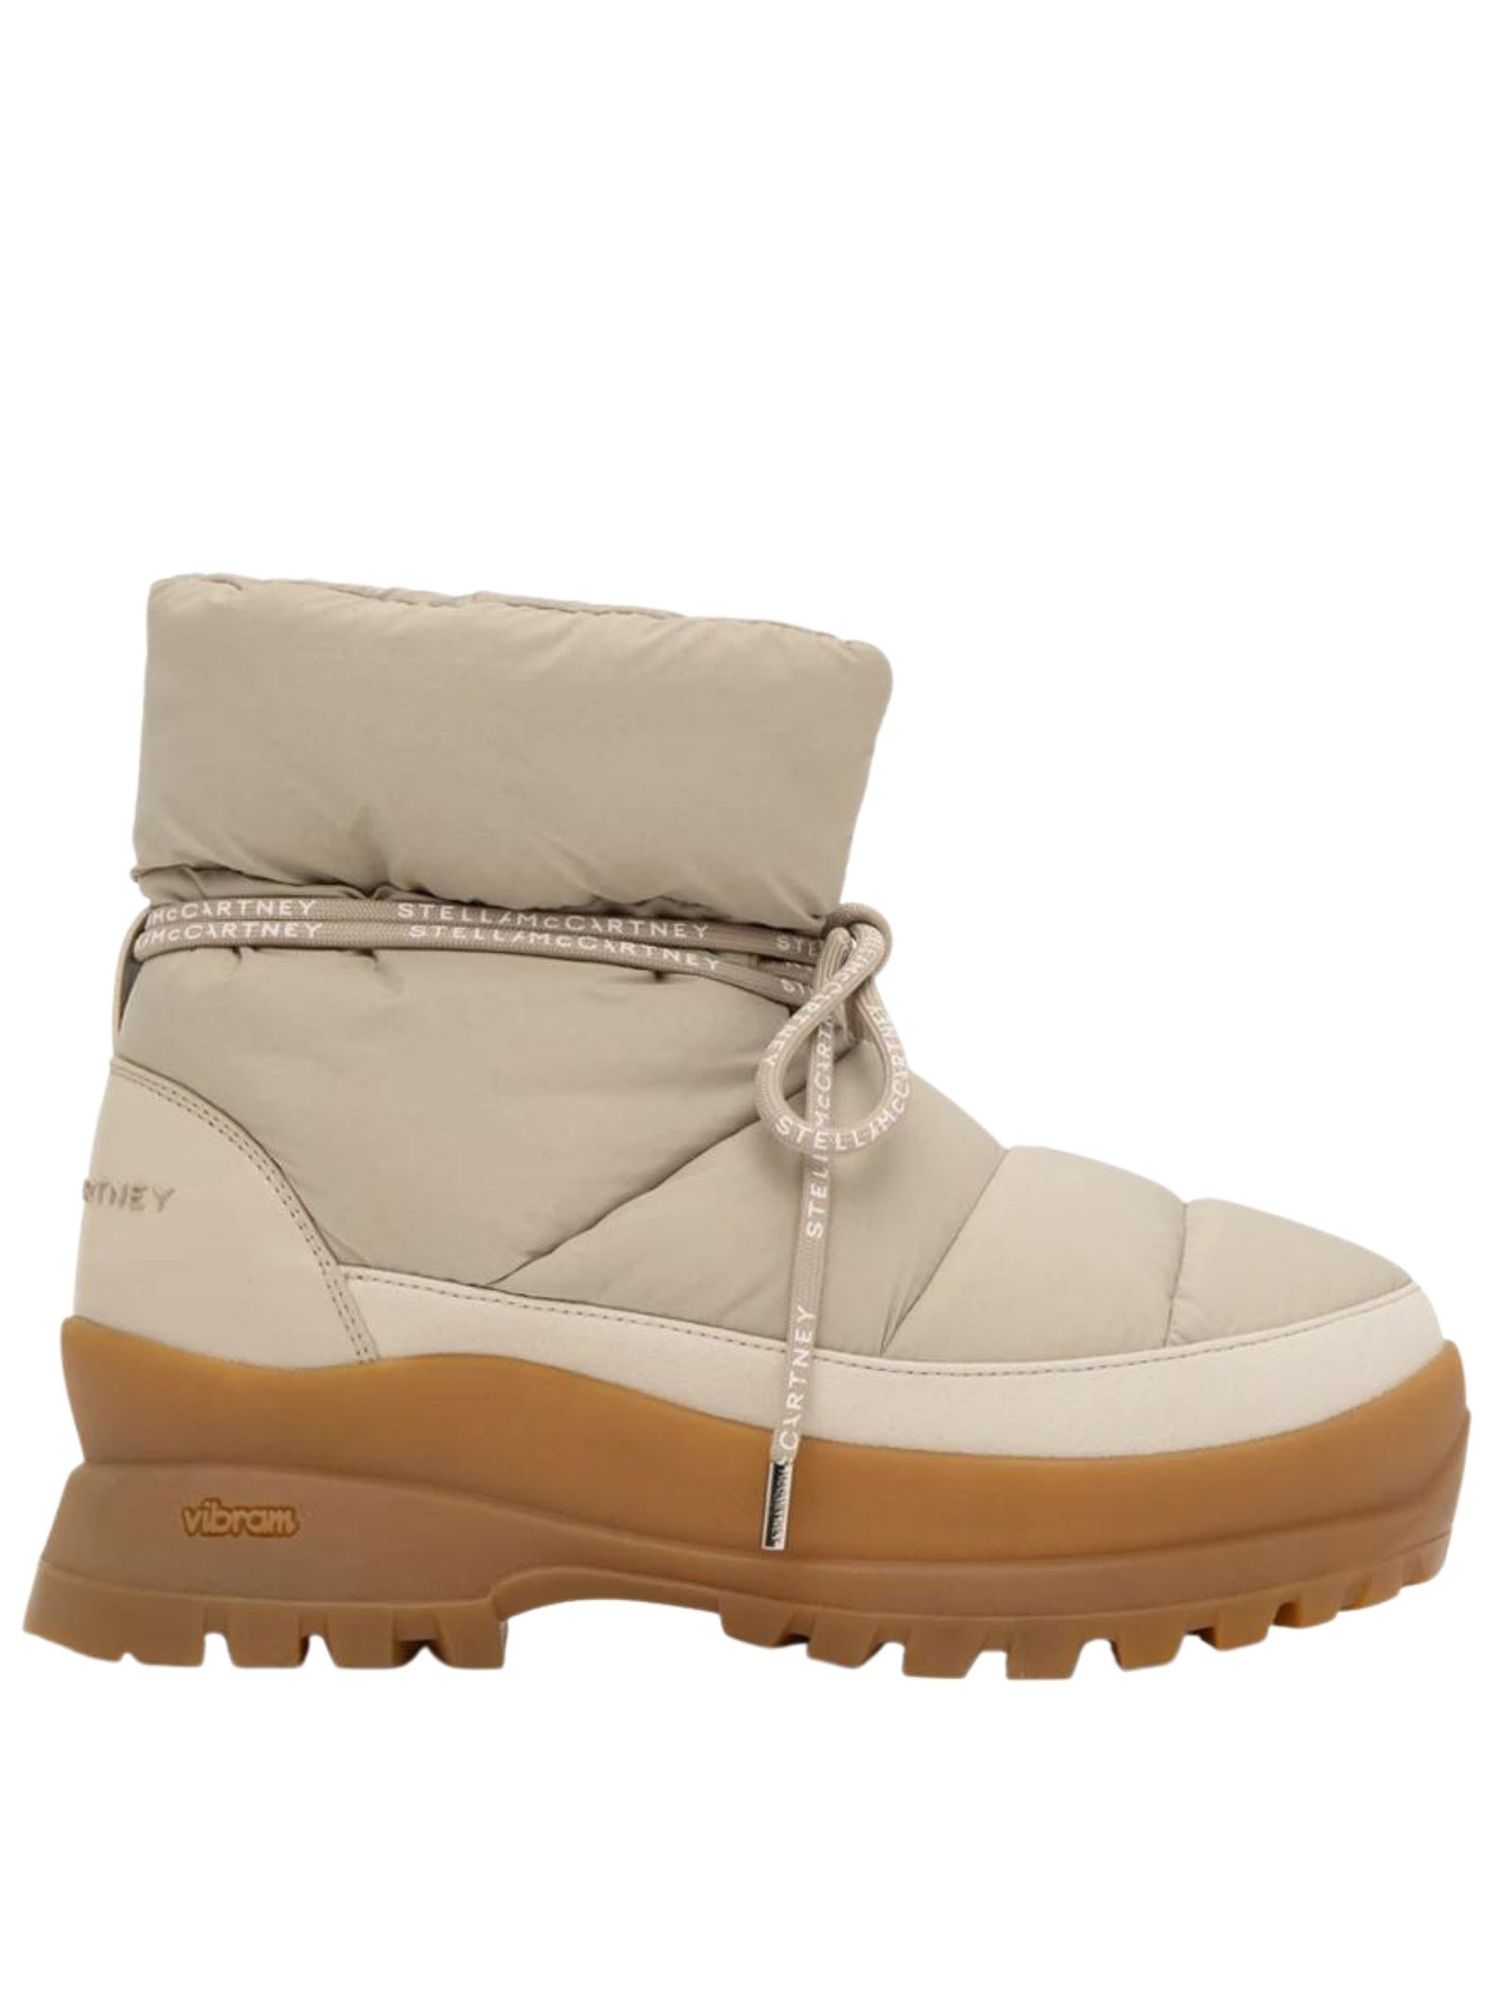 The 48 buy boots now to Vogue - Scandinavia best winter